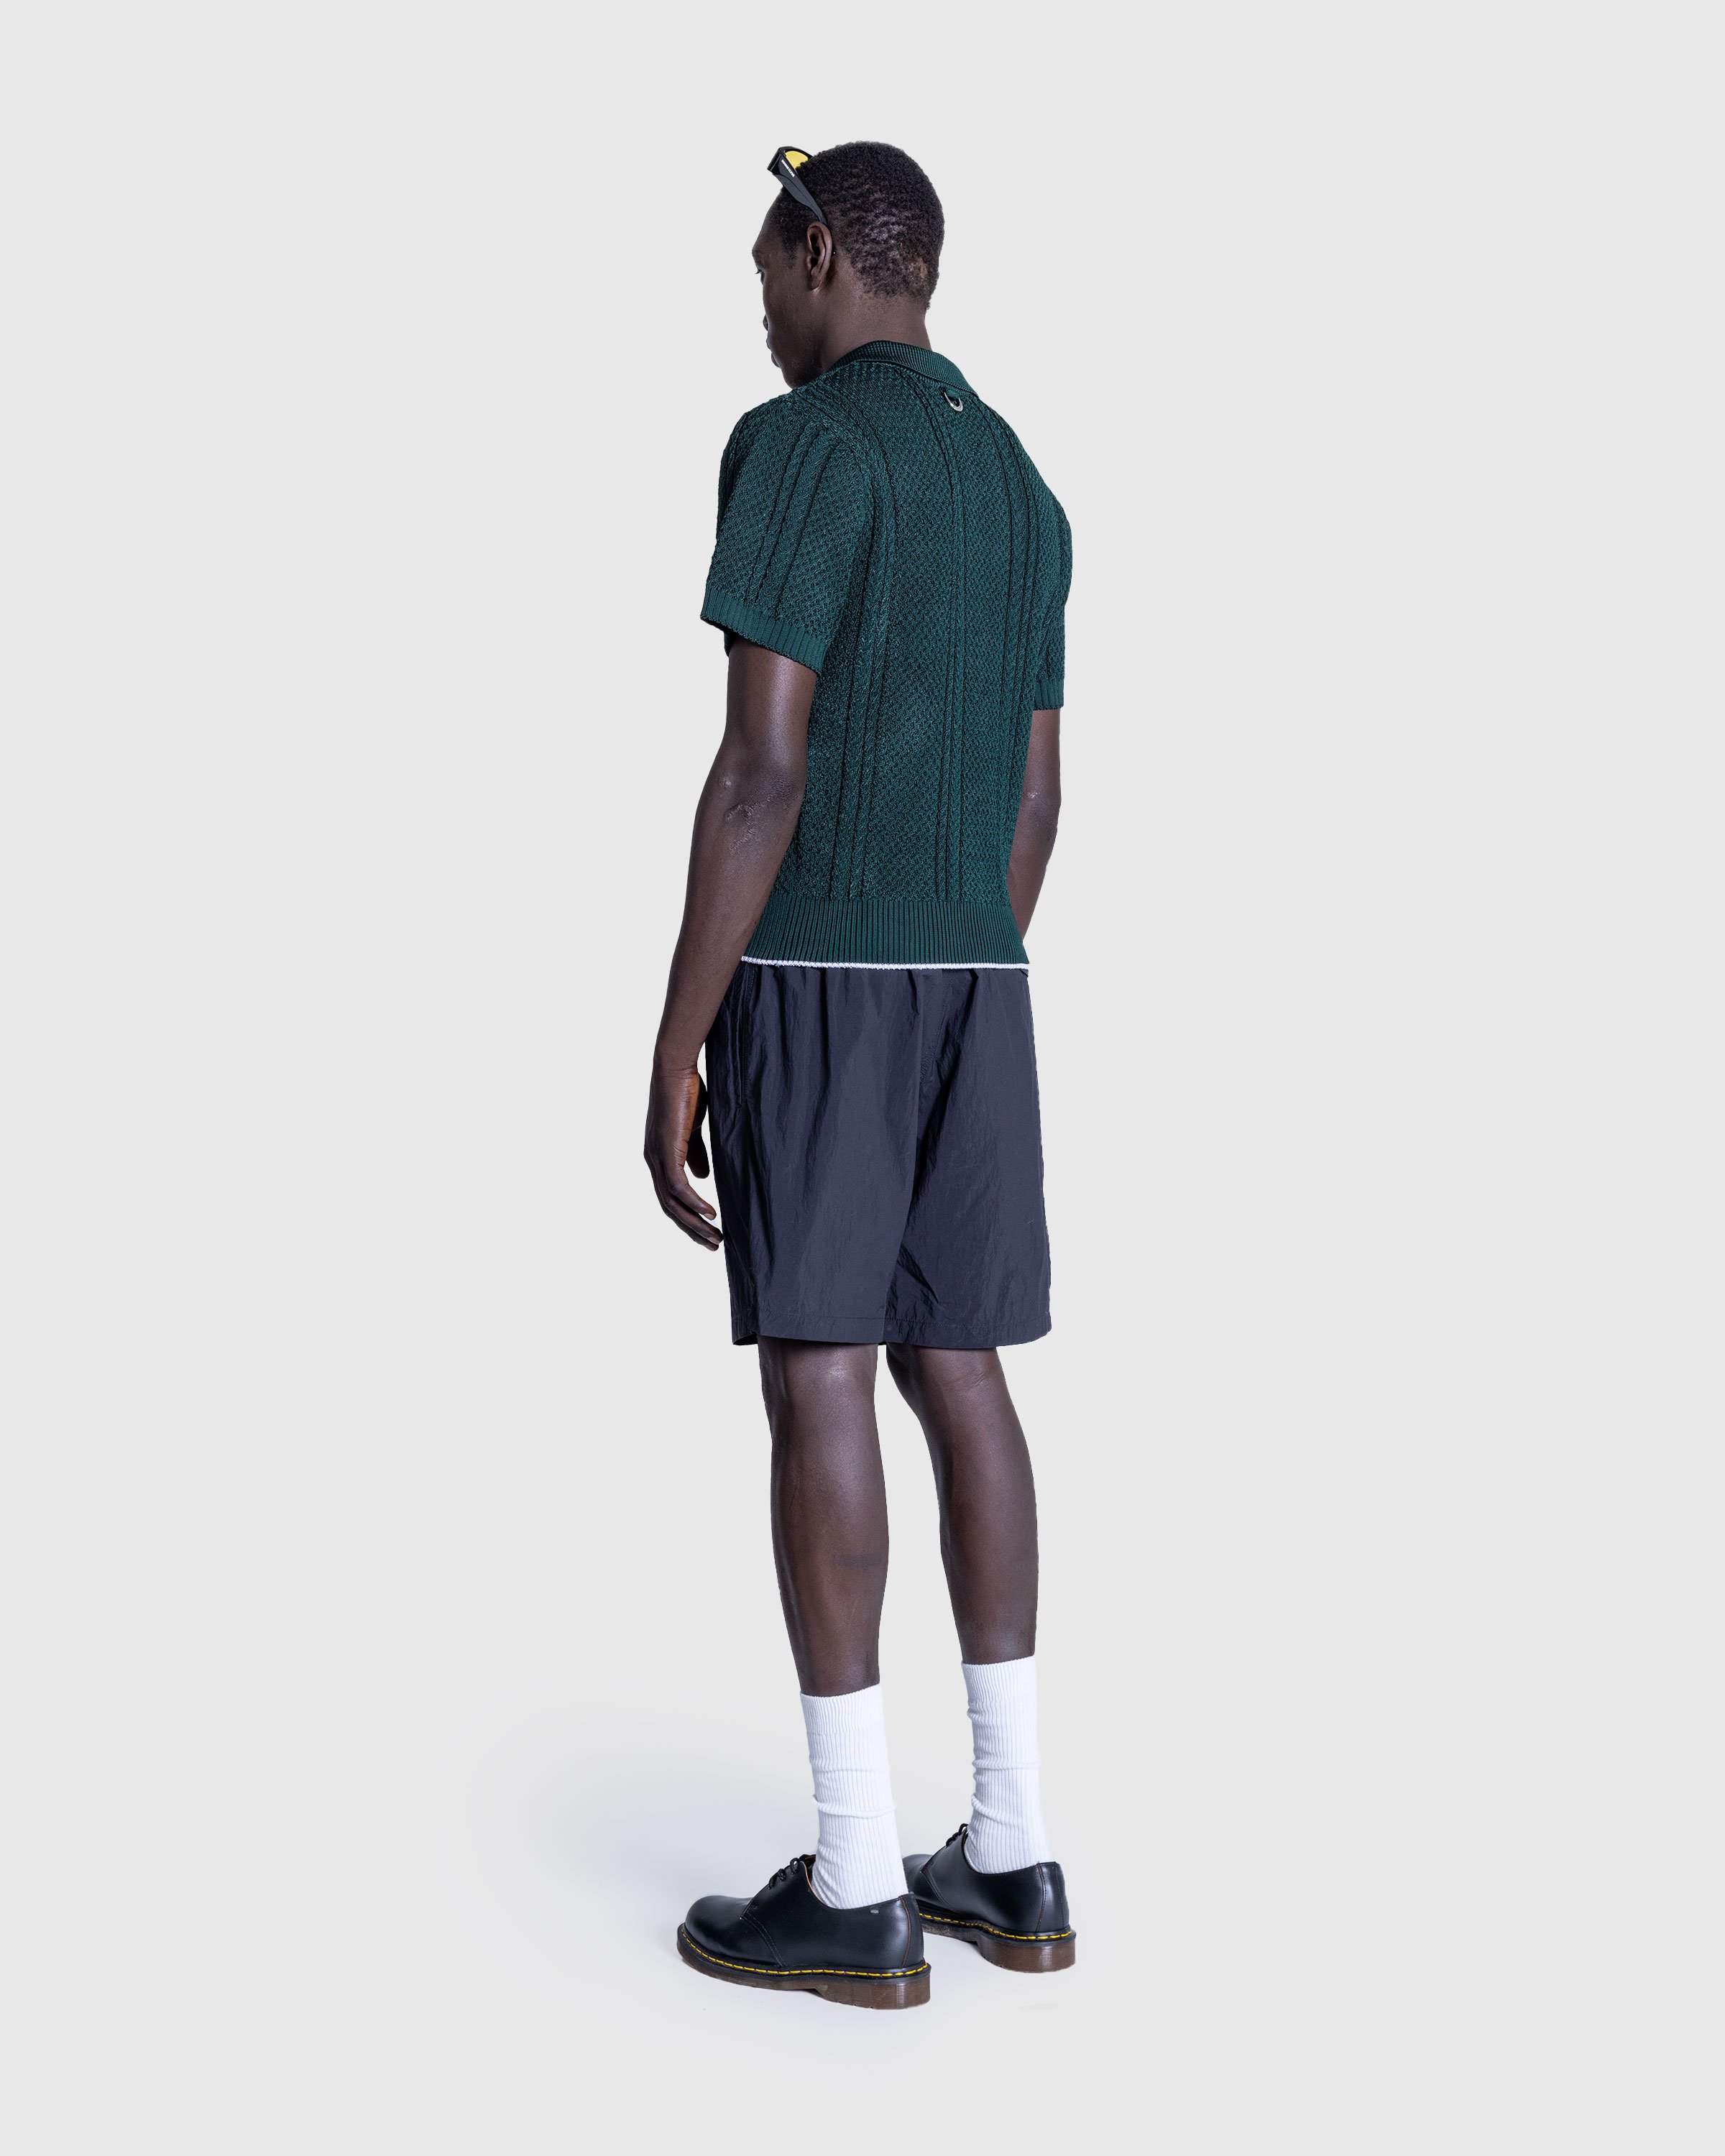 JACQUEMUS - LE POLO BELO - Clothing - Green - Image 4